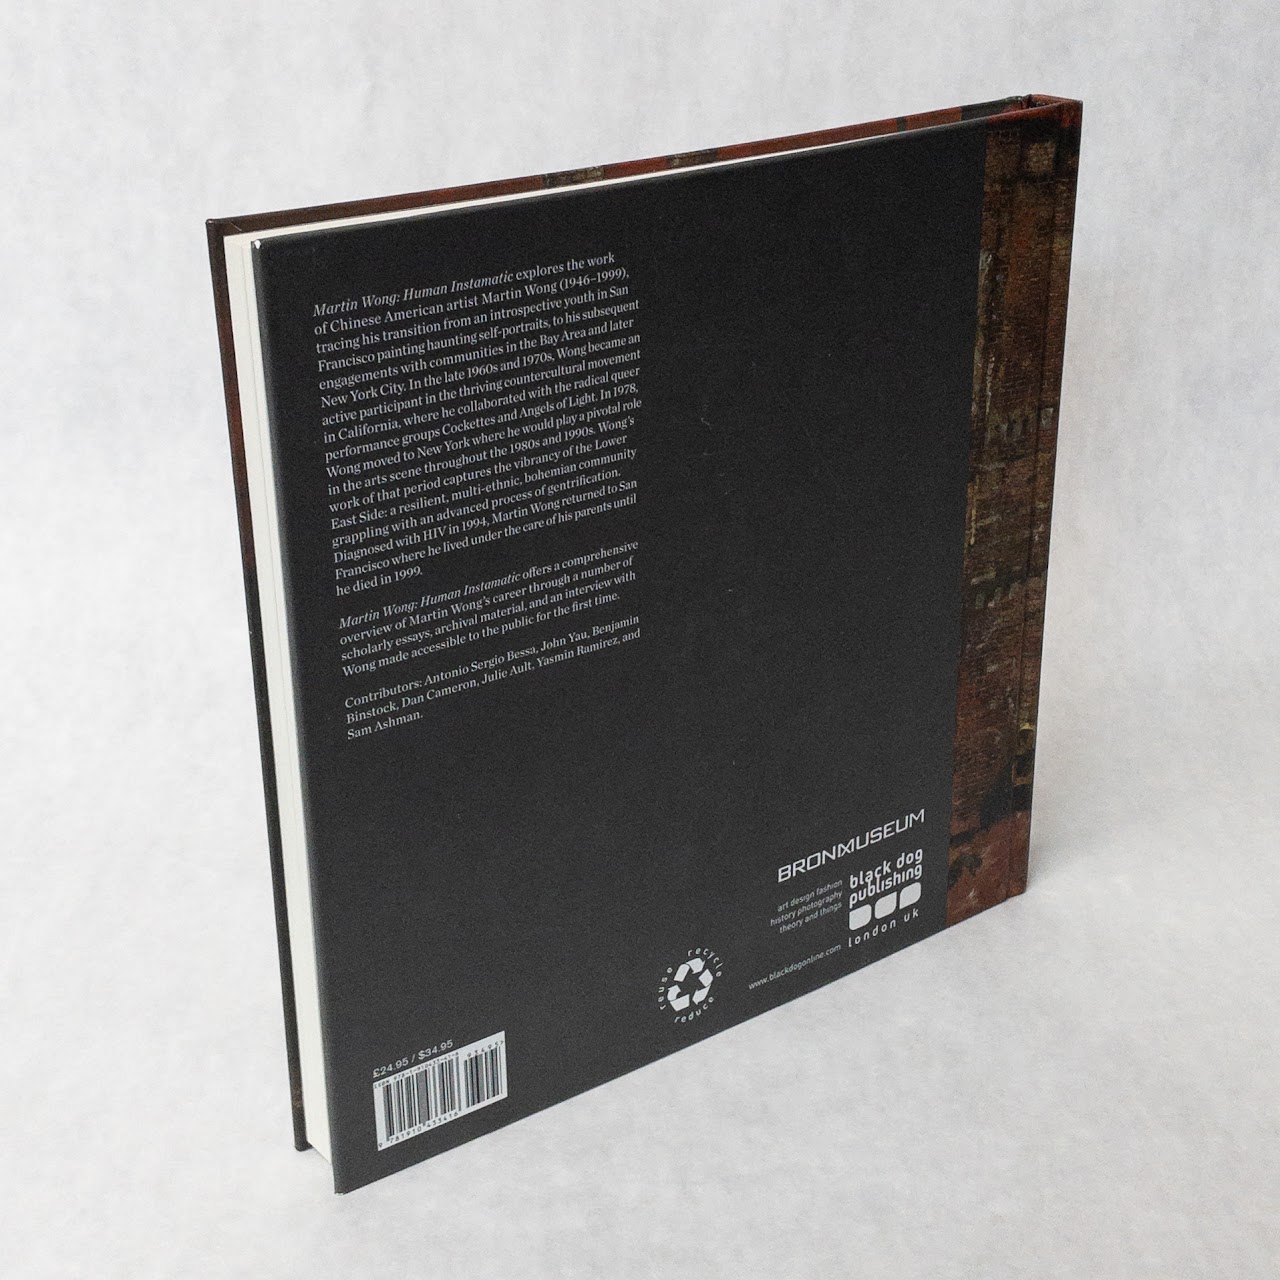 Martin Wong: Human Instamatic' Exhibition Book